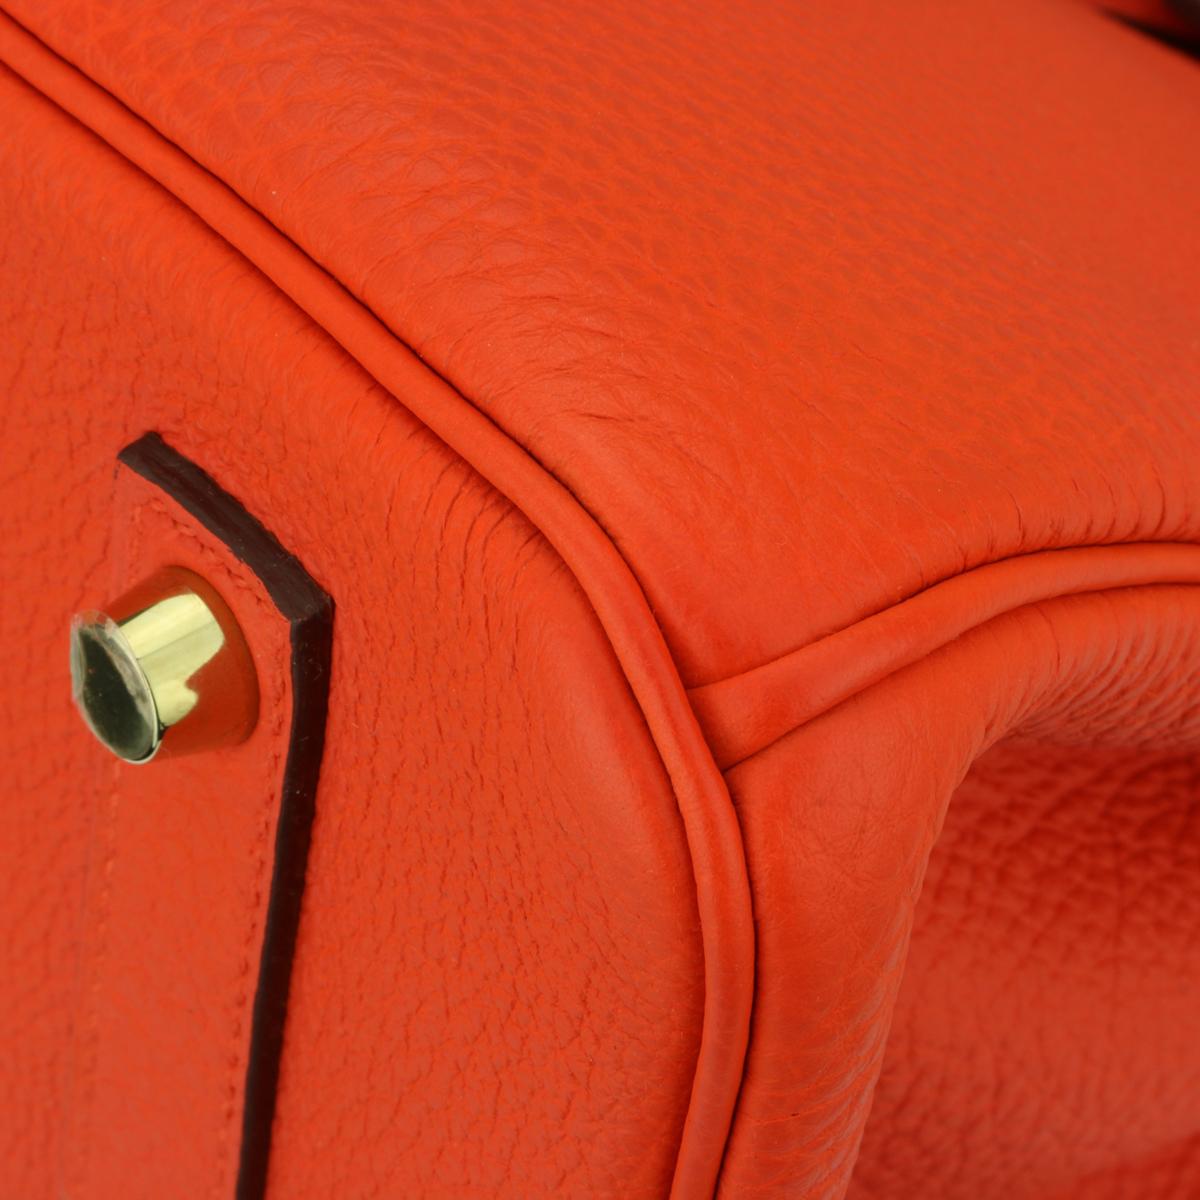 Hermès Birkin Bag 35cm Special Order HSS Bag Capucine Togo Leather w/GHW 2015 2